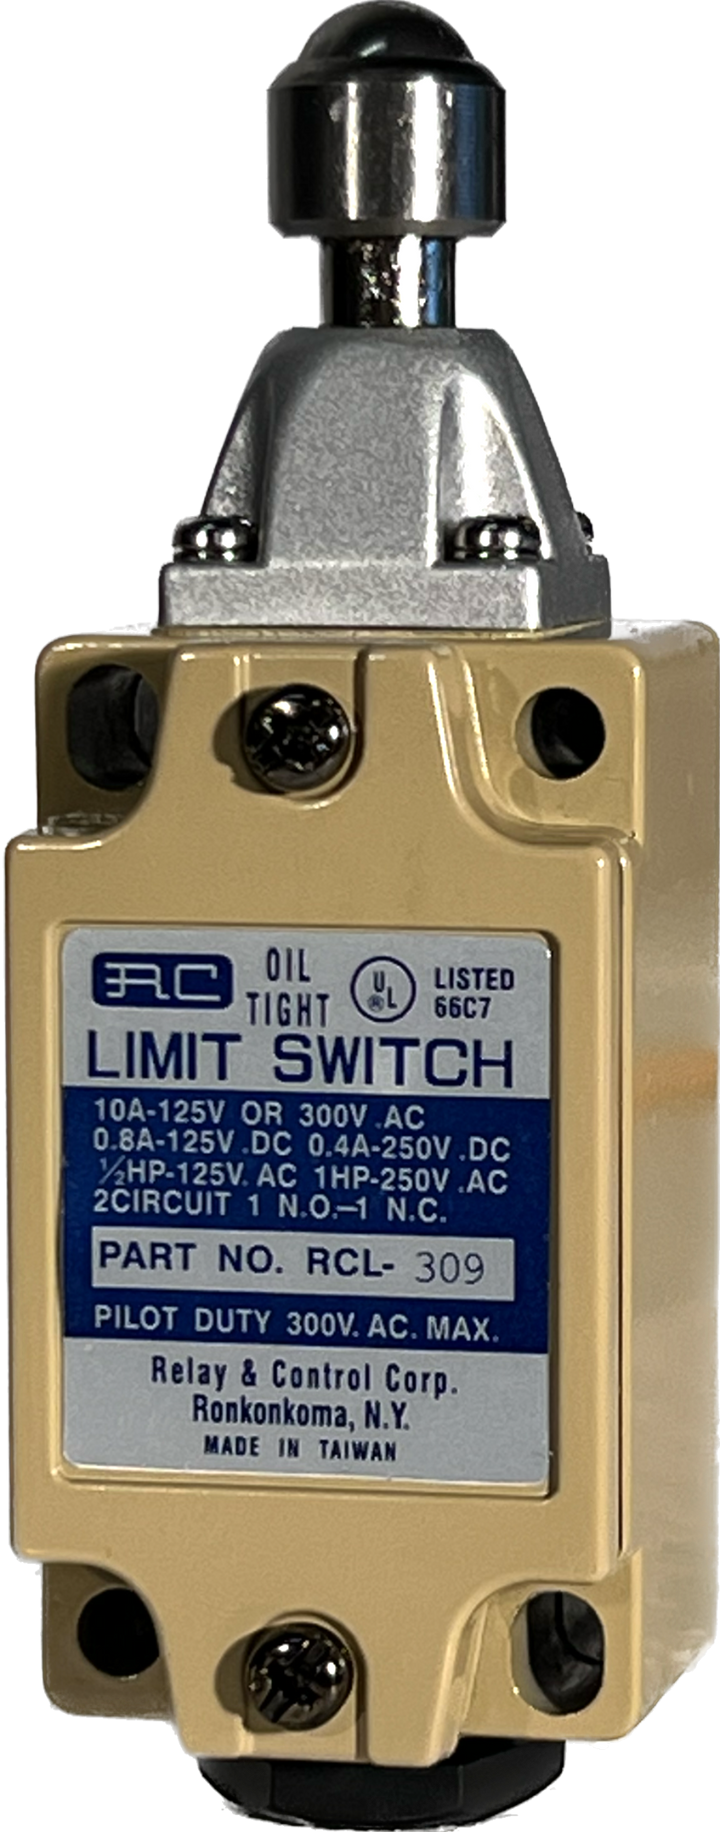 RCL-309 Precision Oil Tight Limit Switch